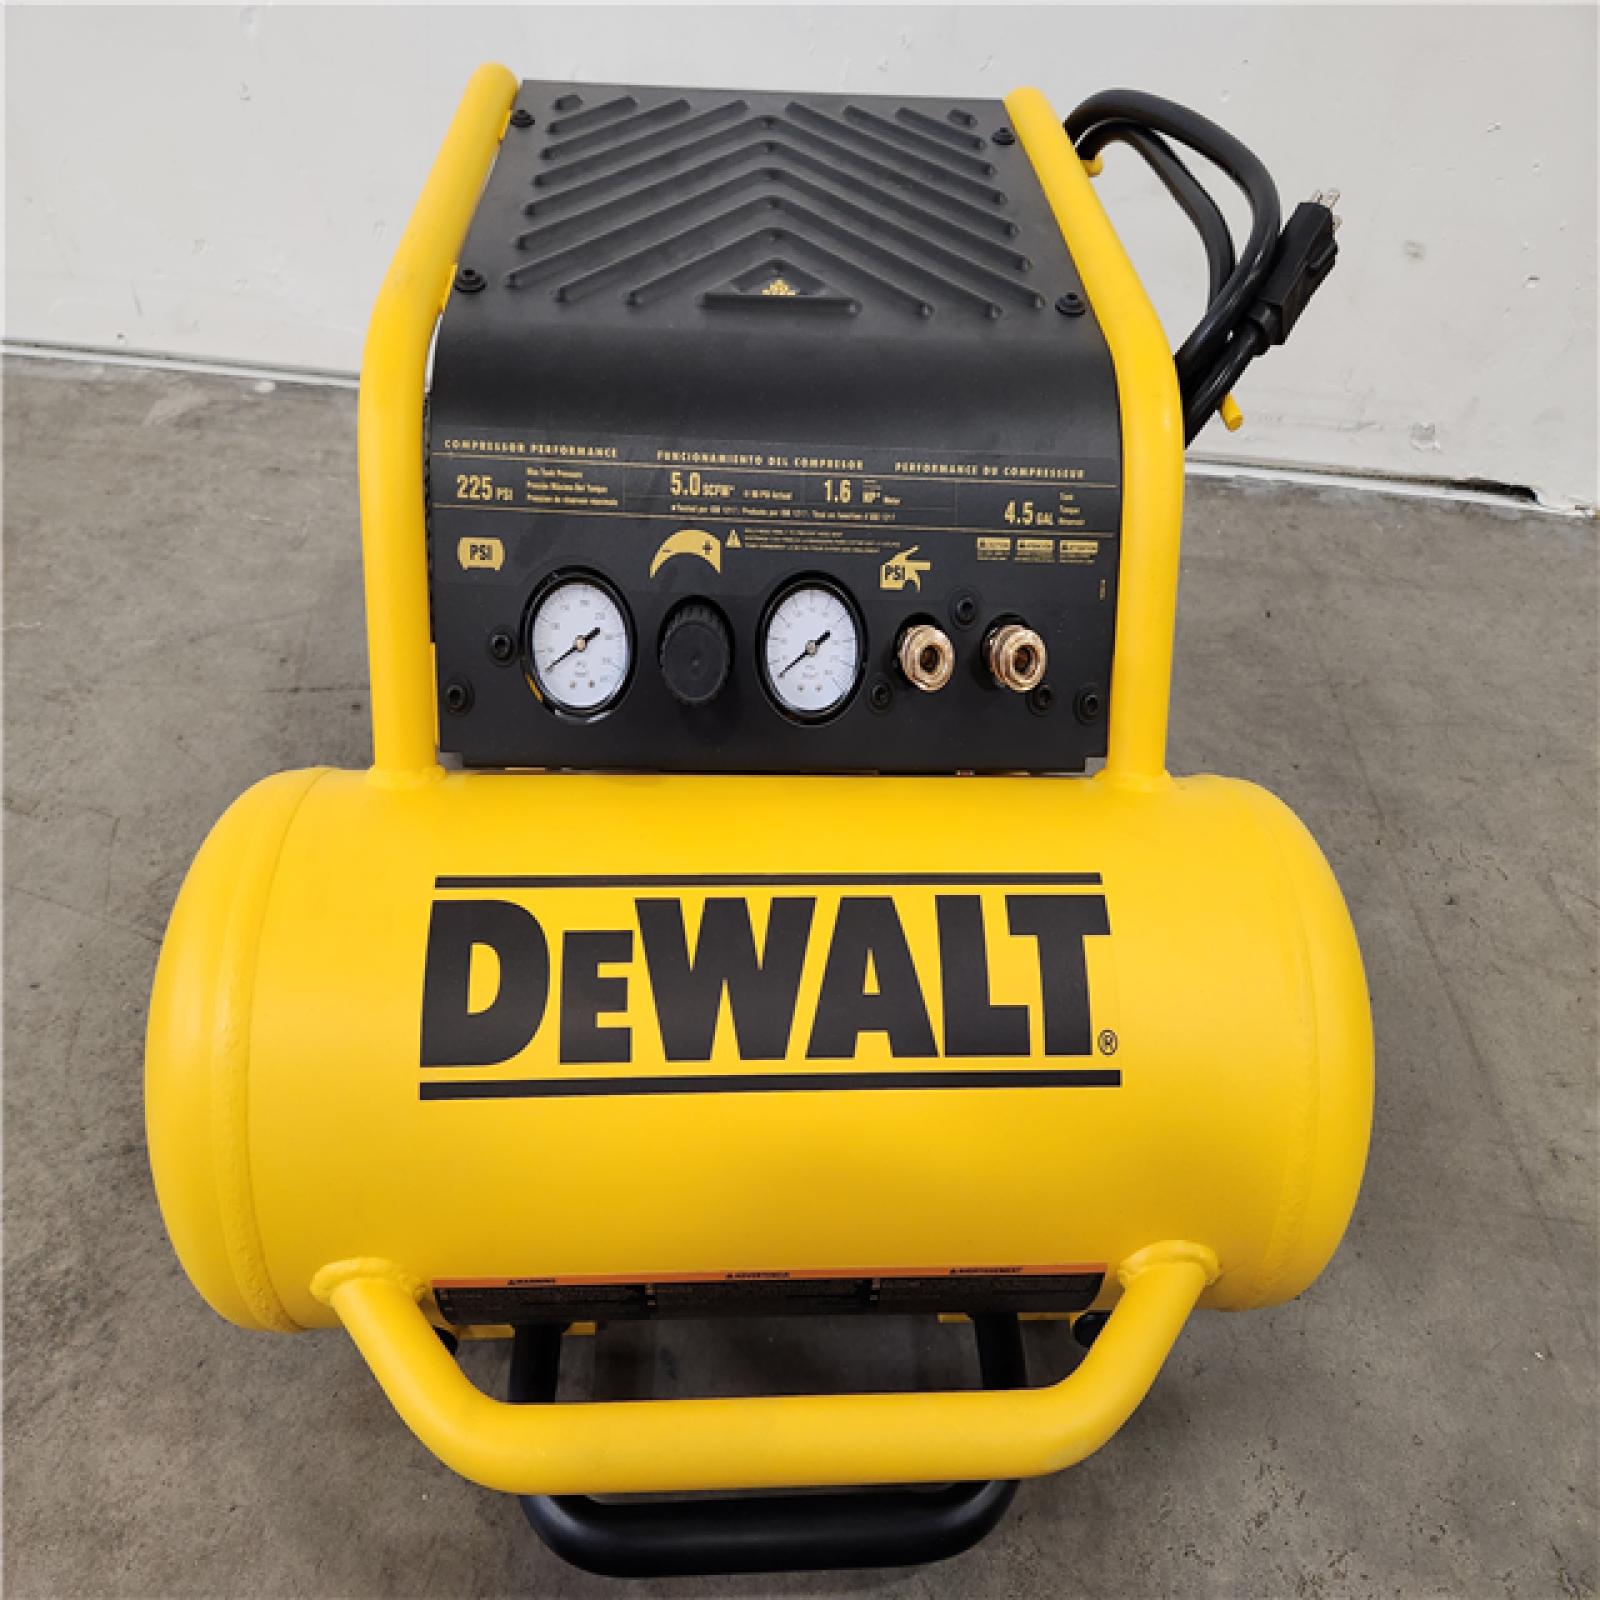 Phoenix Location NEW DEWALT 4.5 Gal. Portable Electric Air Compressor